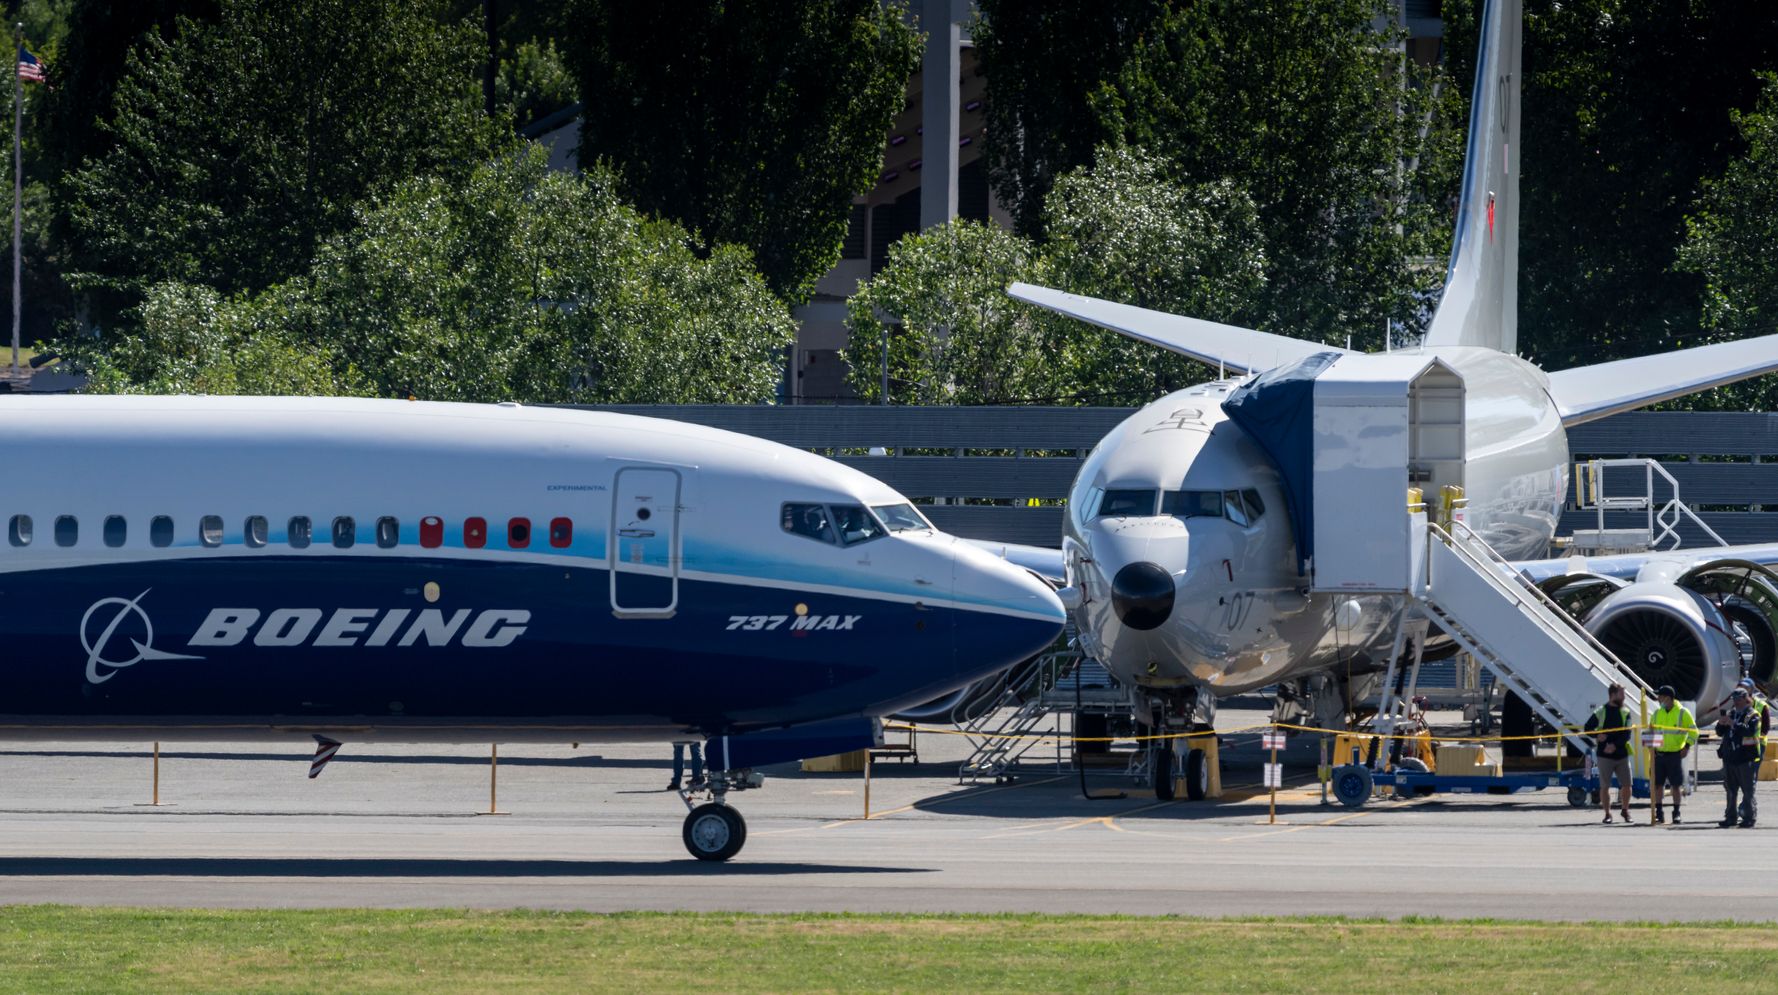 Former Boeing Test Pilot Indicted For Allegedly Deceiving 737 Max Safety Regulators